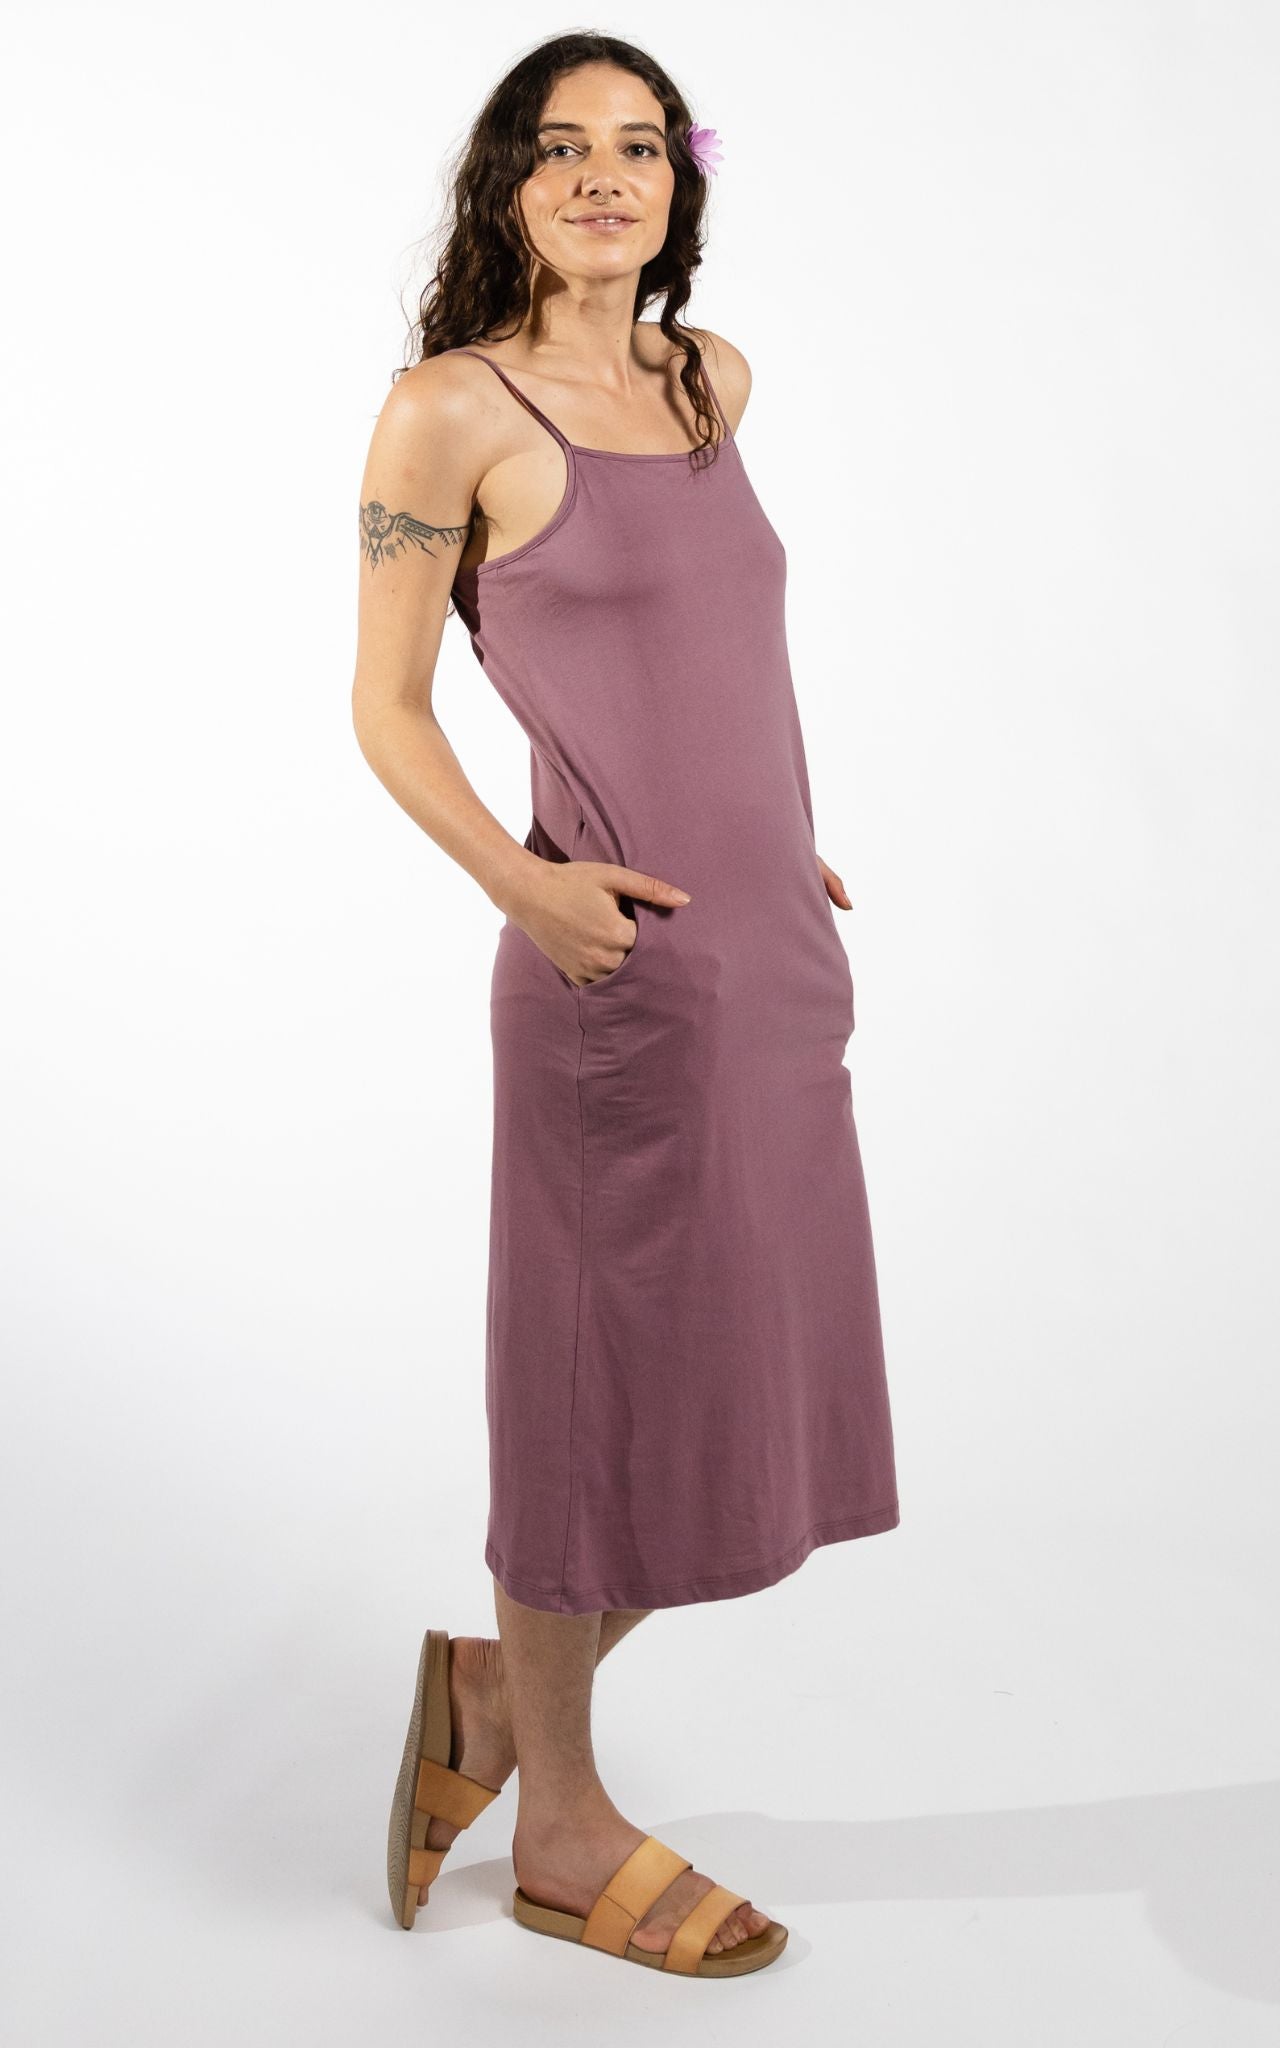 Surya Australia Organic Cotton Slip Dress made in Nepal - Dusty Mauve 